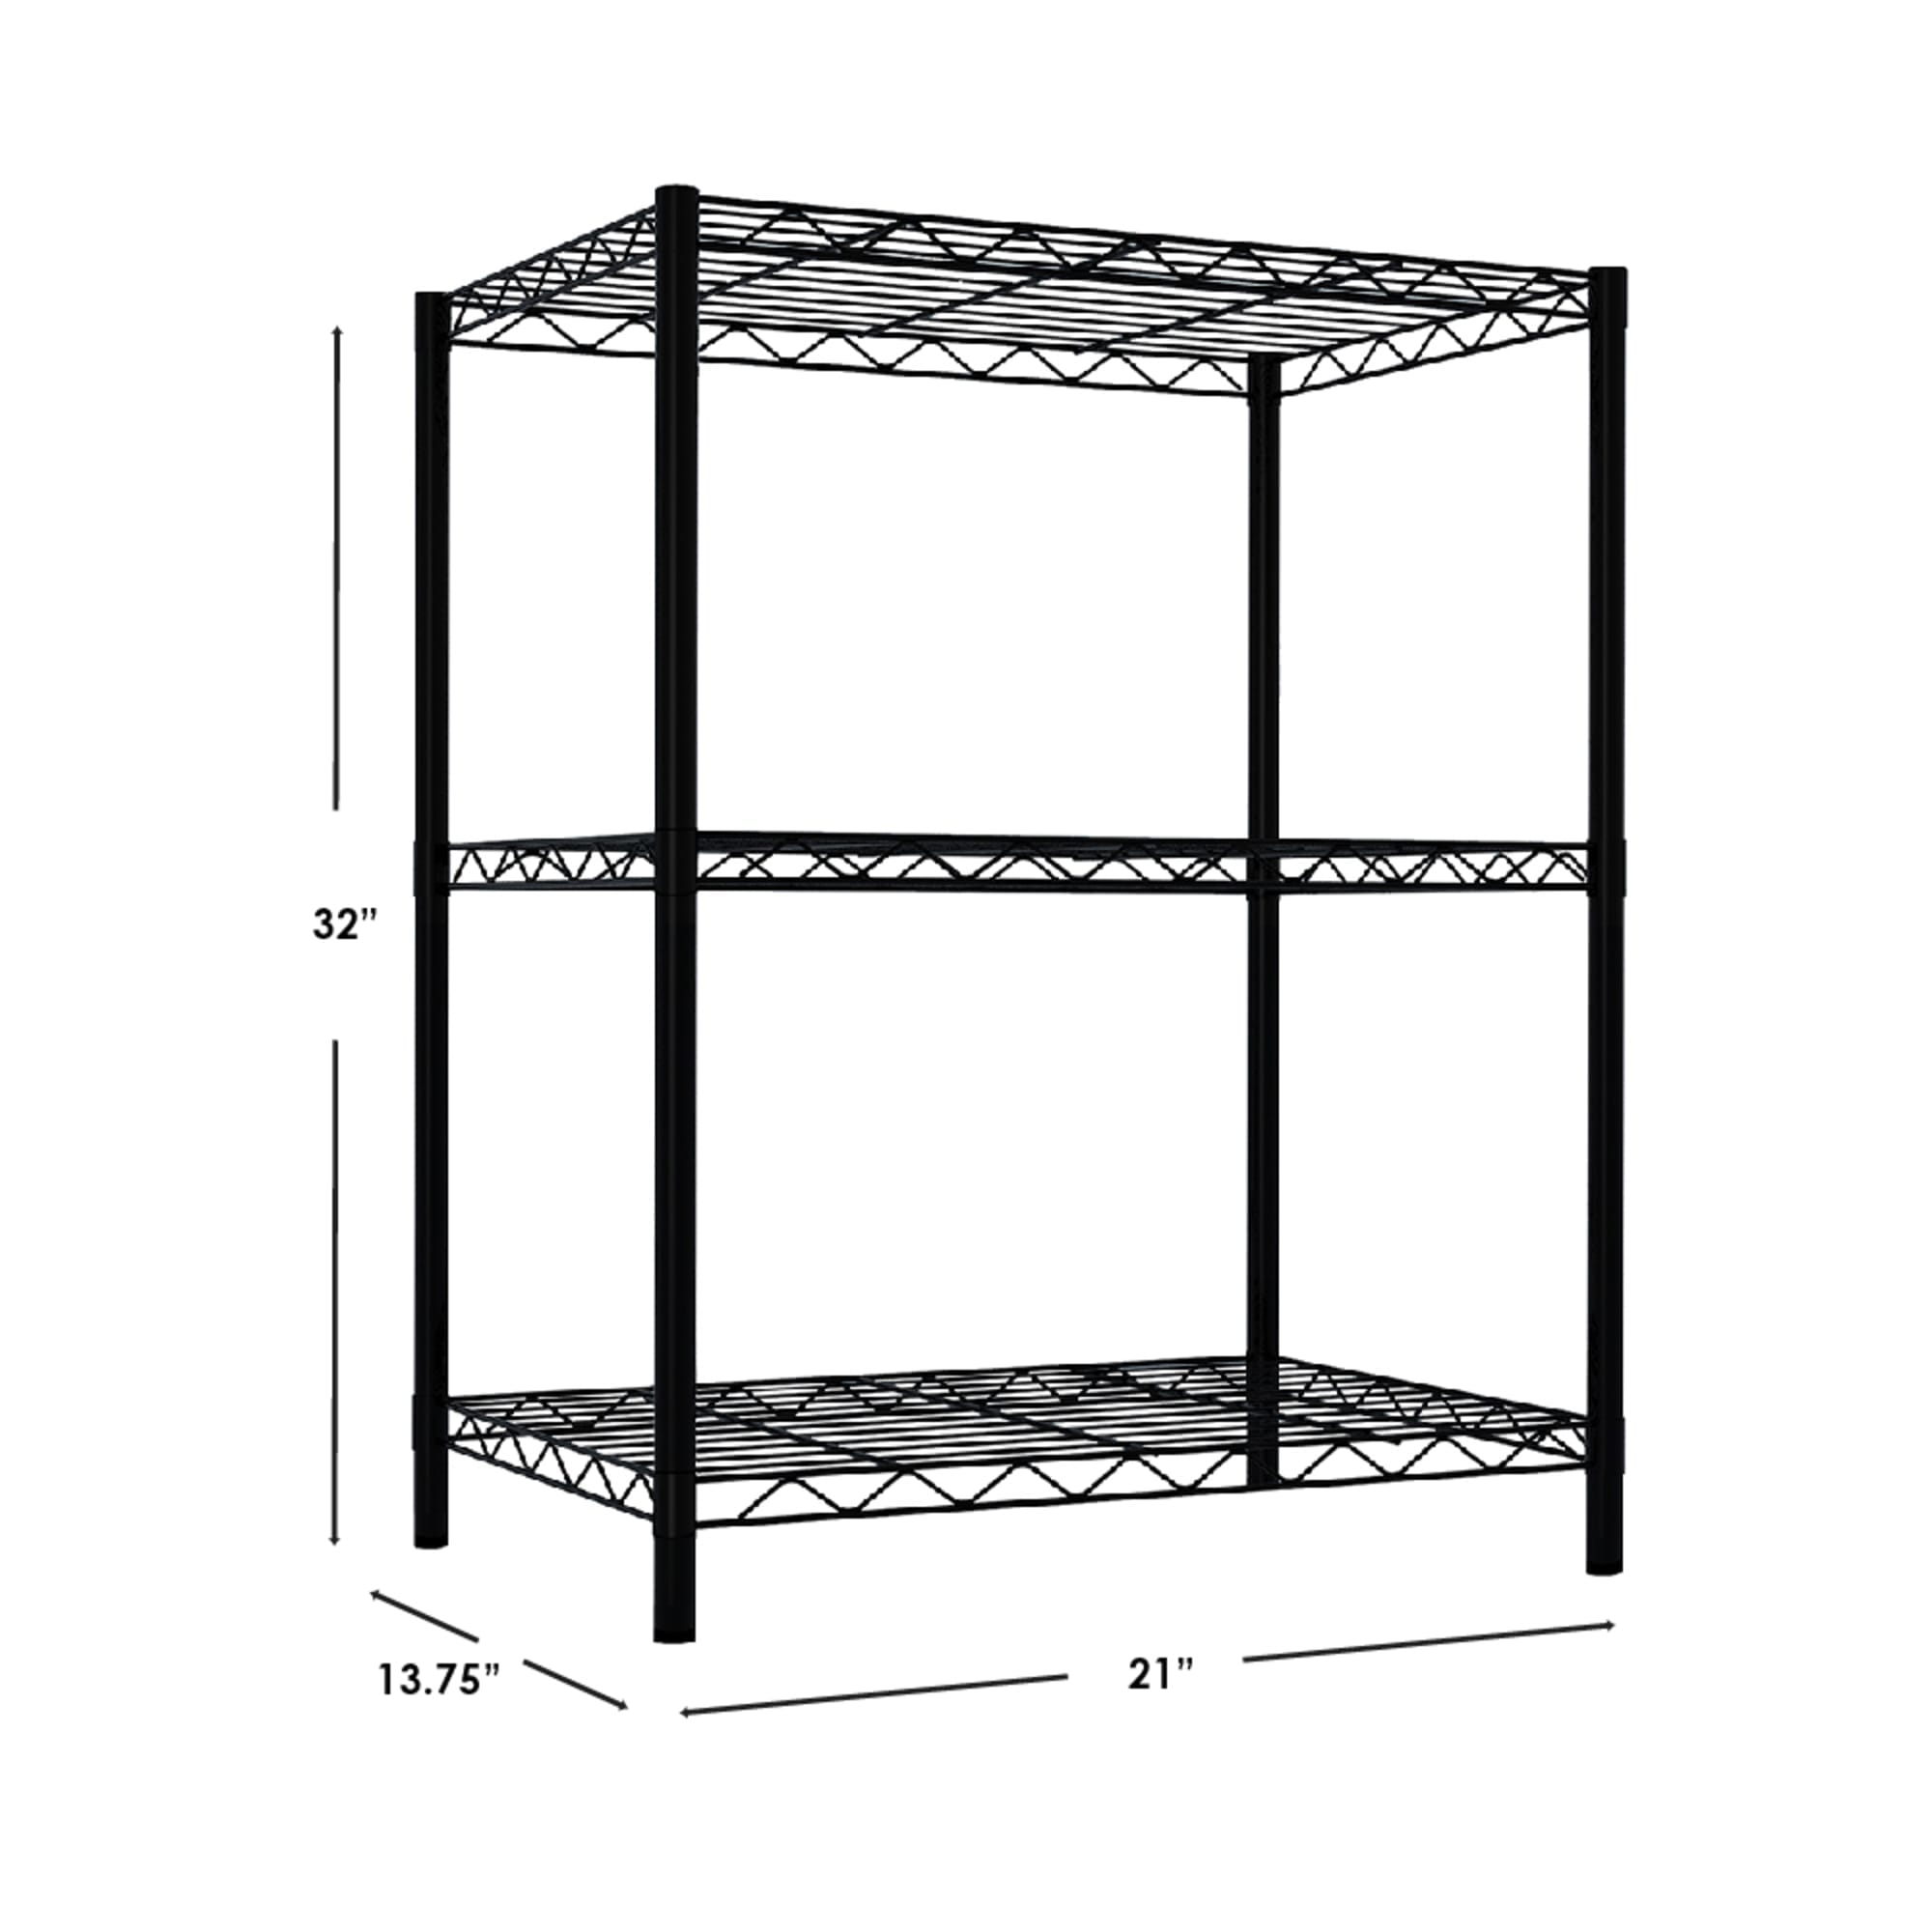 Home Basics 3 Tier Metal Multi-Purpose Free-Standing Heavy Duty Shelf, Black $30.00 EACH, CASE PACK OF 4